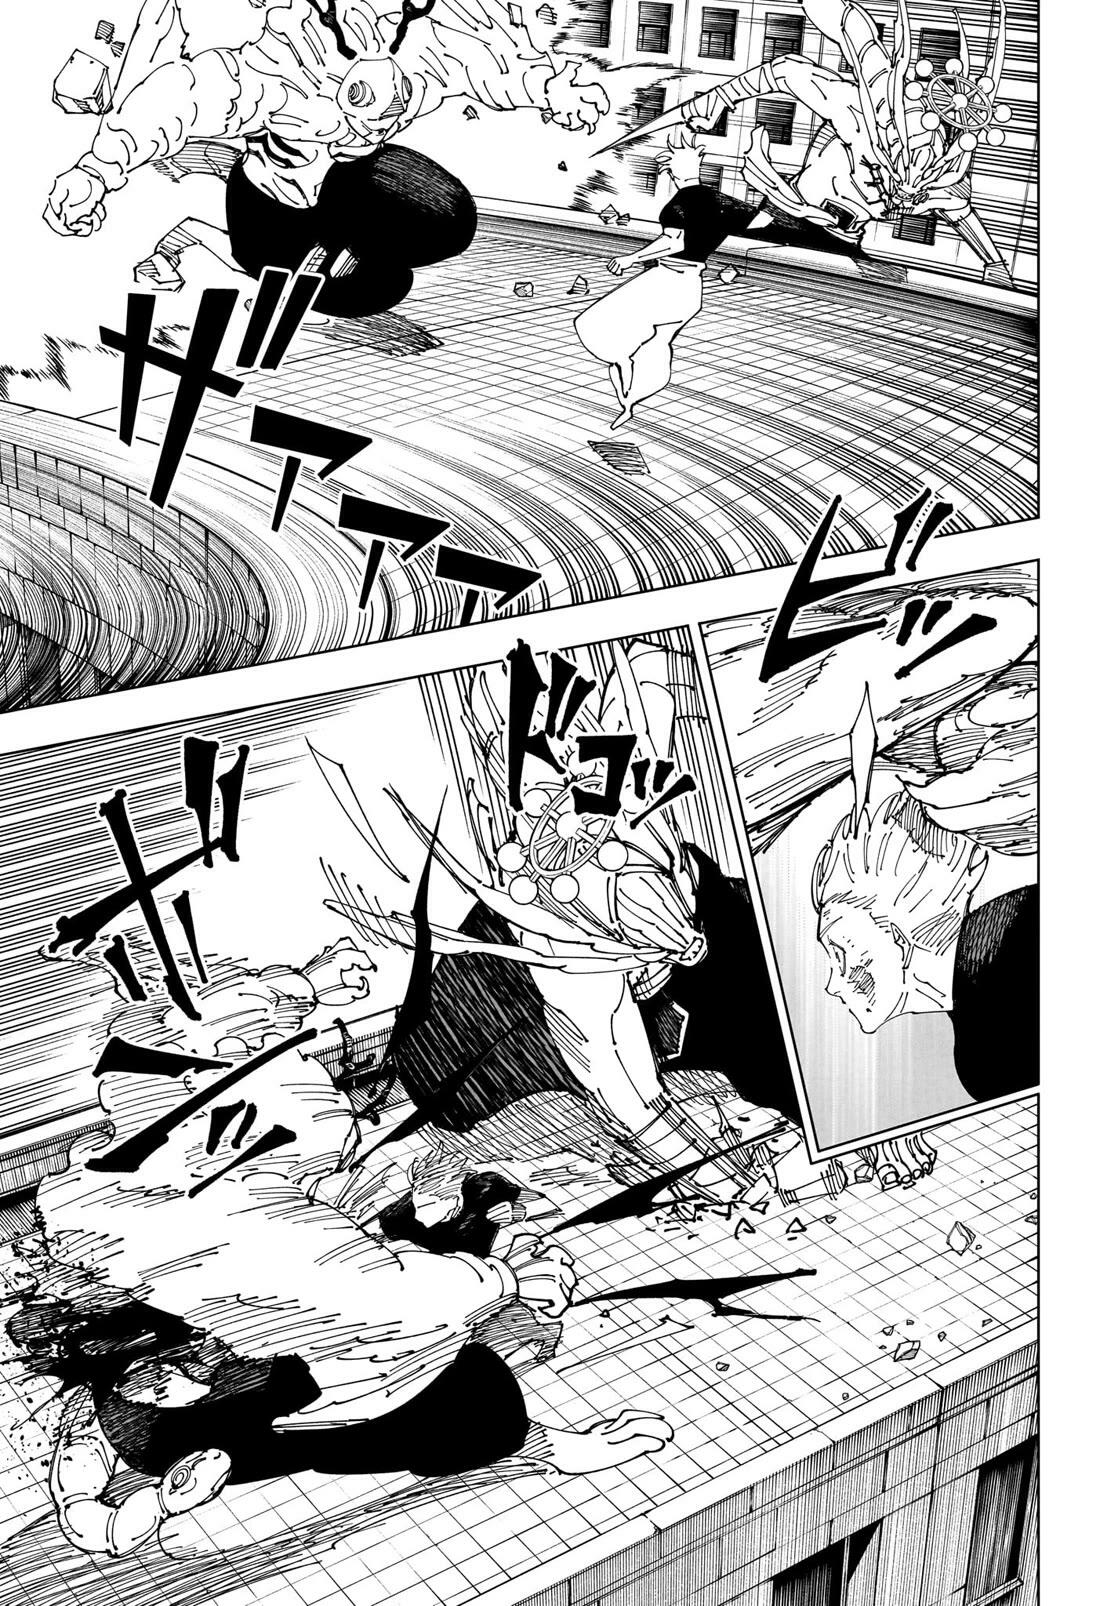 Jujutsu Kaisen Chapter 234: The Decisive Battle In The Uninhabited, Demon-Infested Shinjuku ⑫ page 6 - Mangakakalot